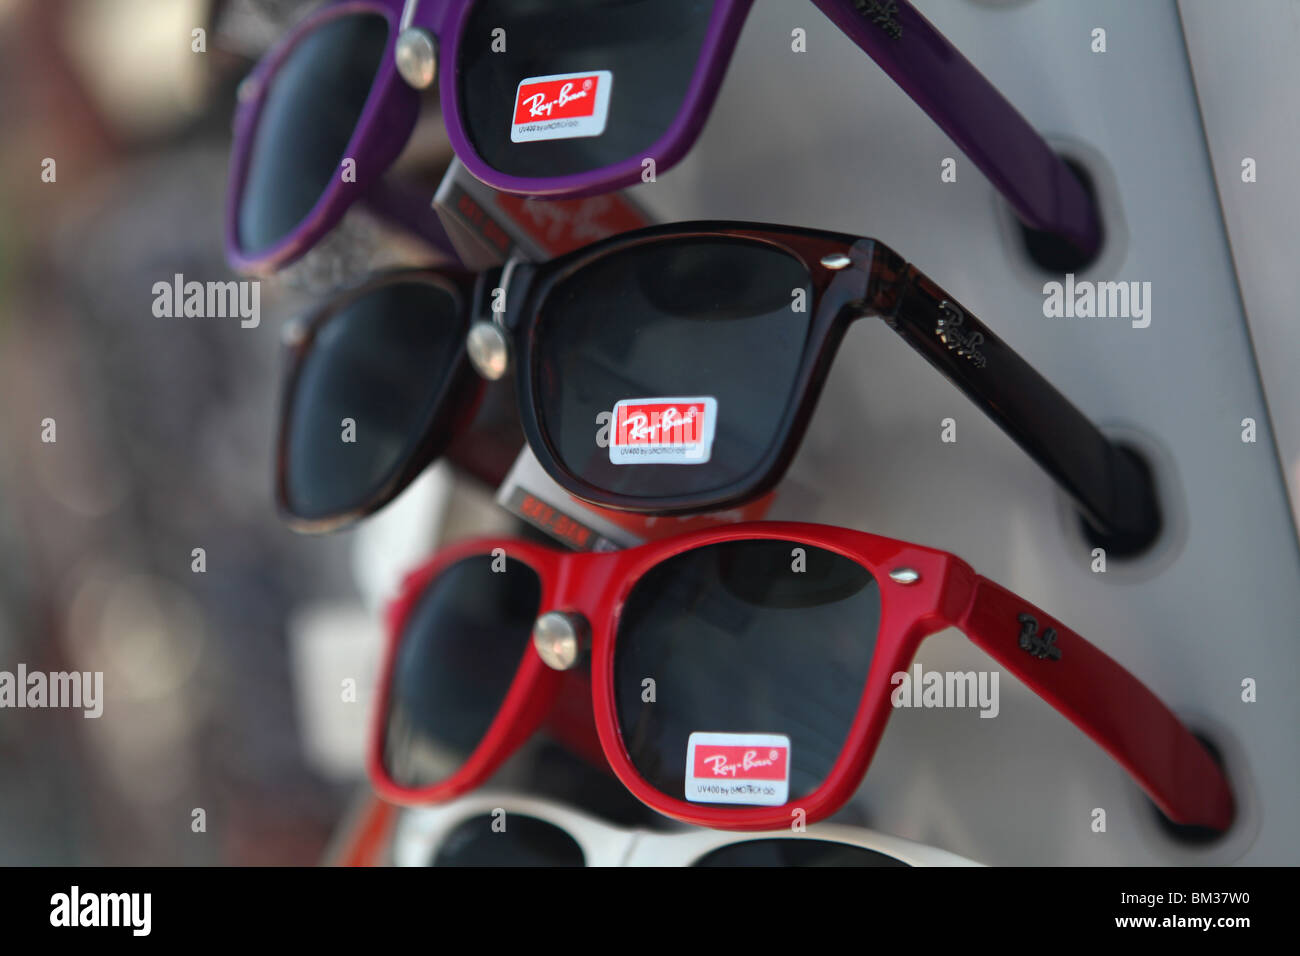 Immitation or fake Ray Ban bans sunglasses on the street in Kuta, Bali, Indonesia Stock Photo